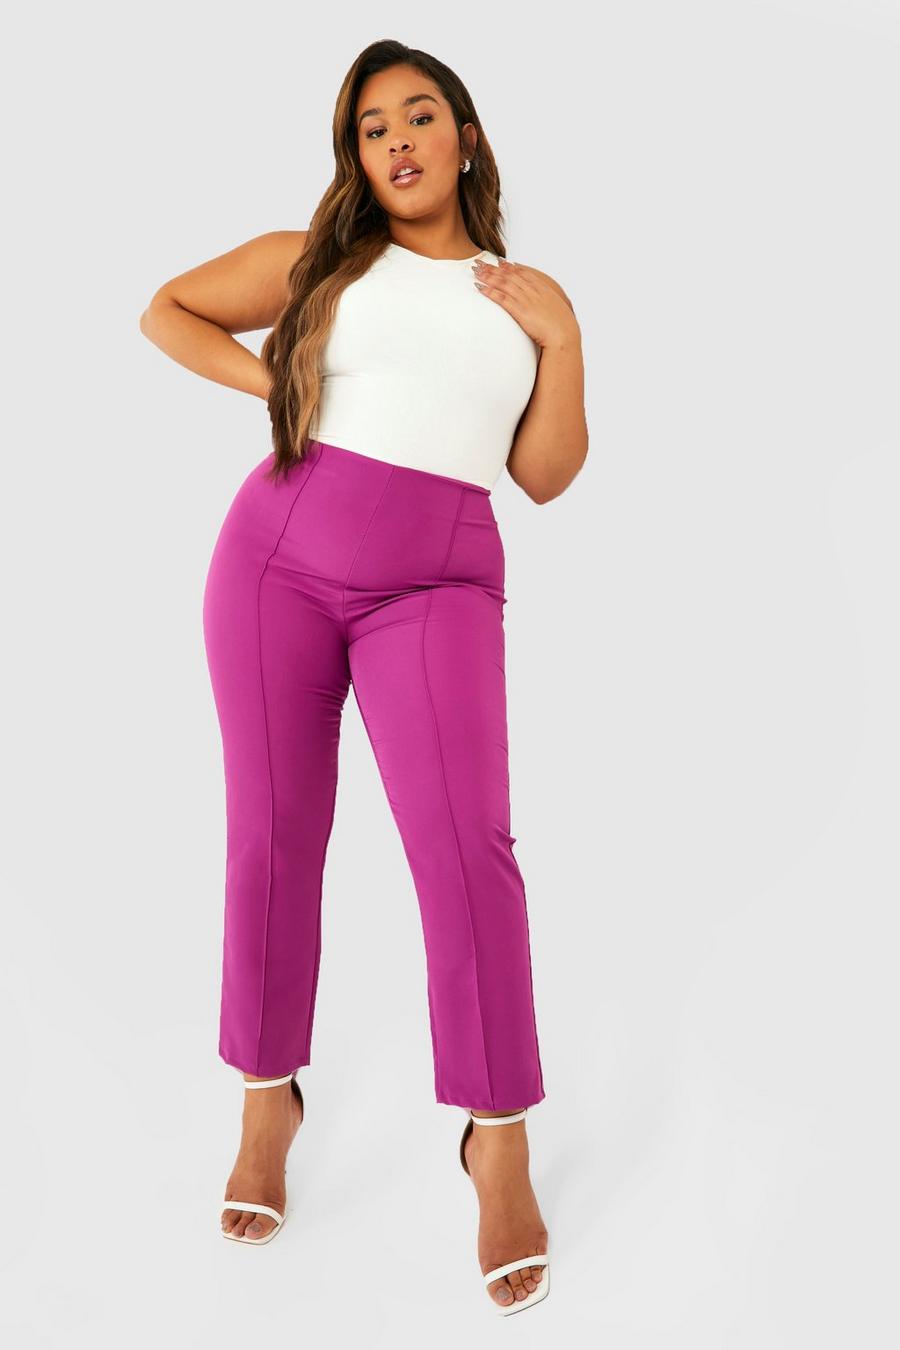 Grande taille - Pantalon à pinces, Hot pink image number 1